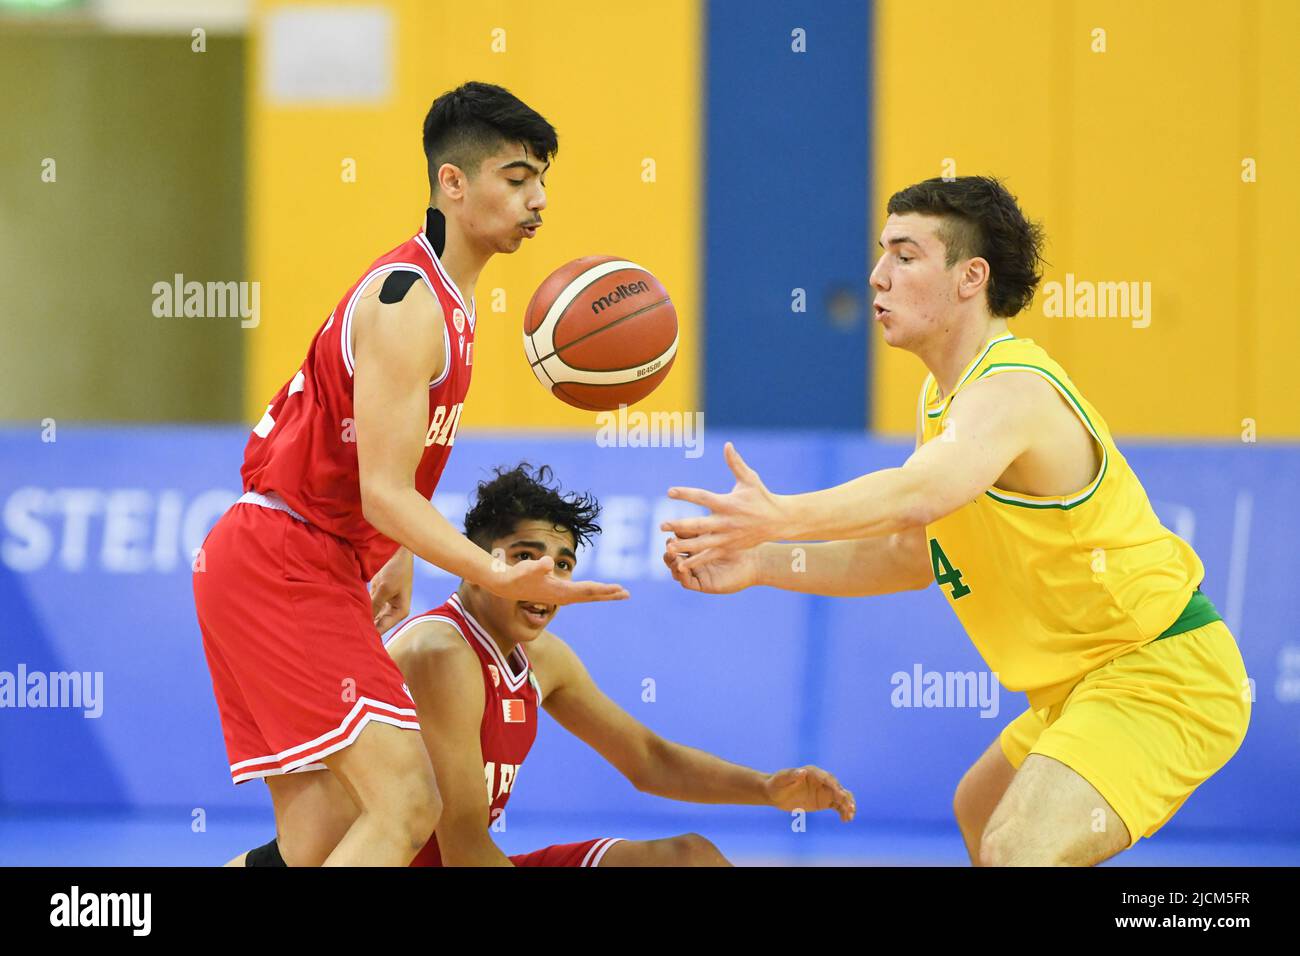 Doha, Qatar - 14 June 2022, Mohamed Ramadhan (L) of Bahrain Basketball team  and Kristian Ferronato (R) of Australia Basketball team in action during  the 2022 FIBA U16 Asian Championship match between